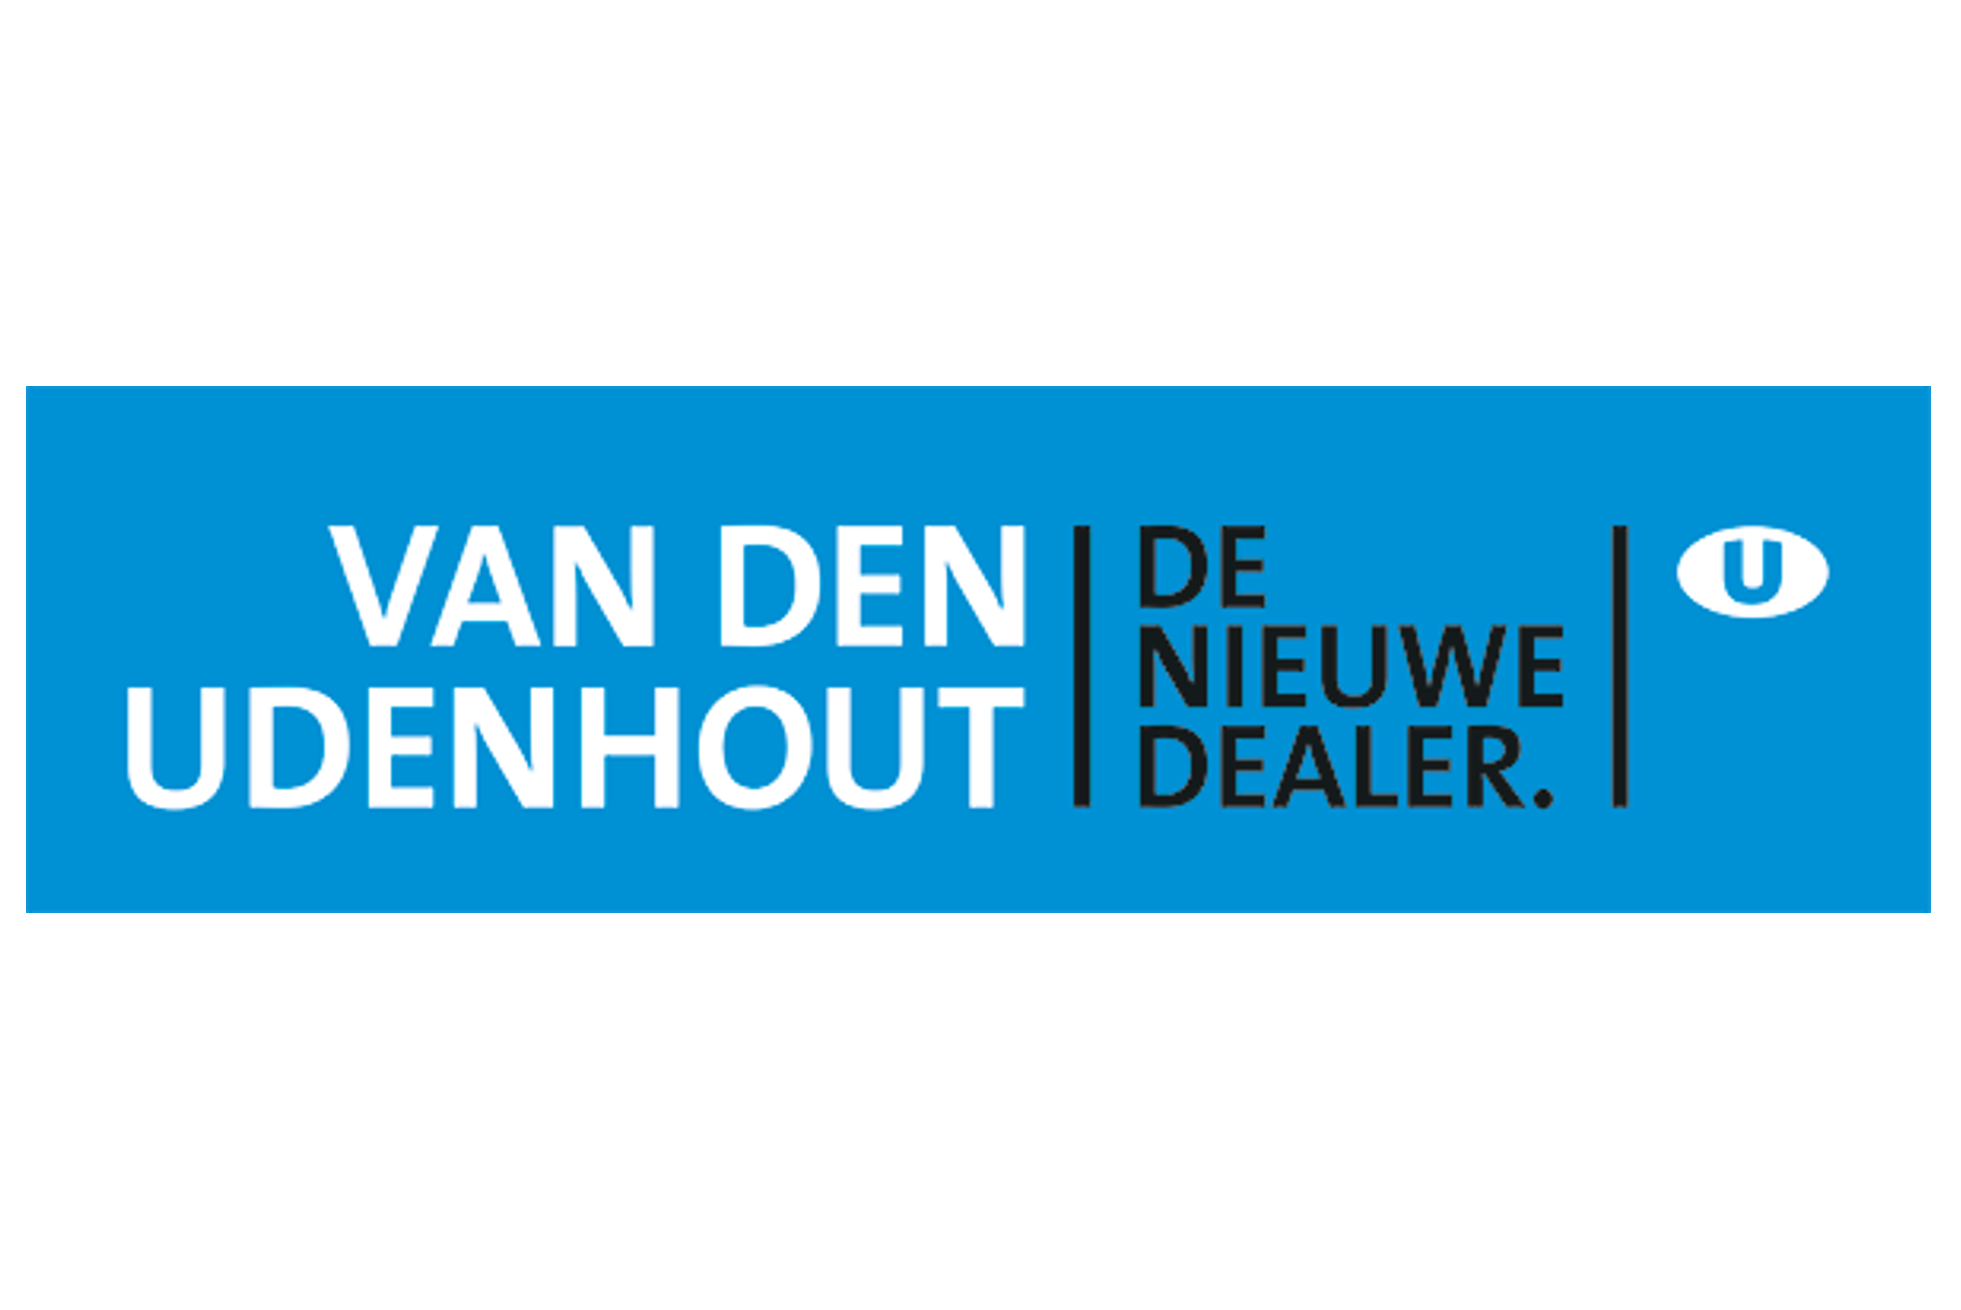 Udenhout logo